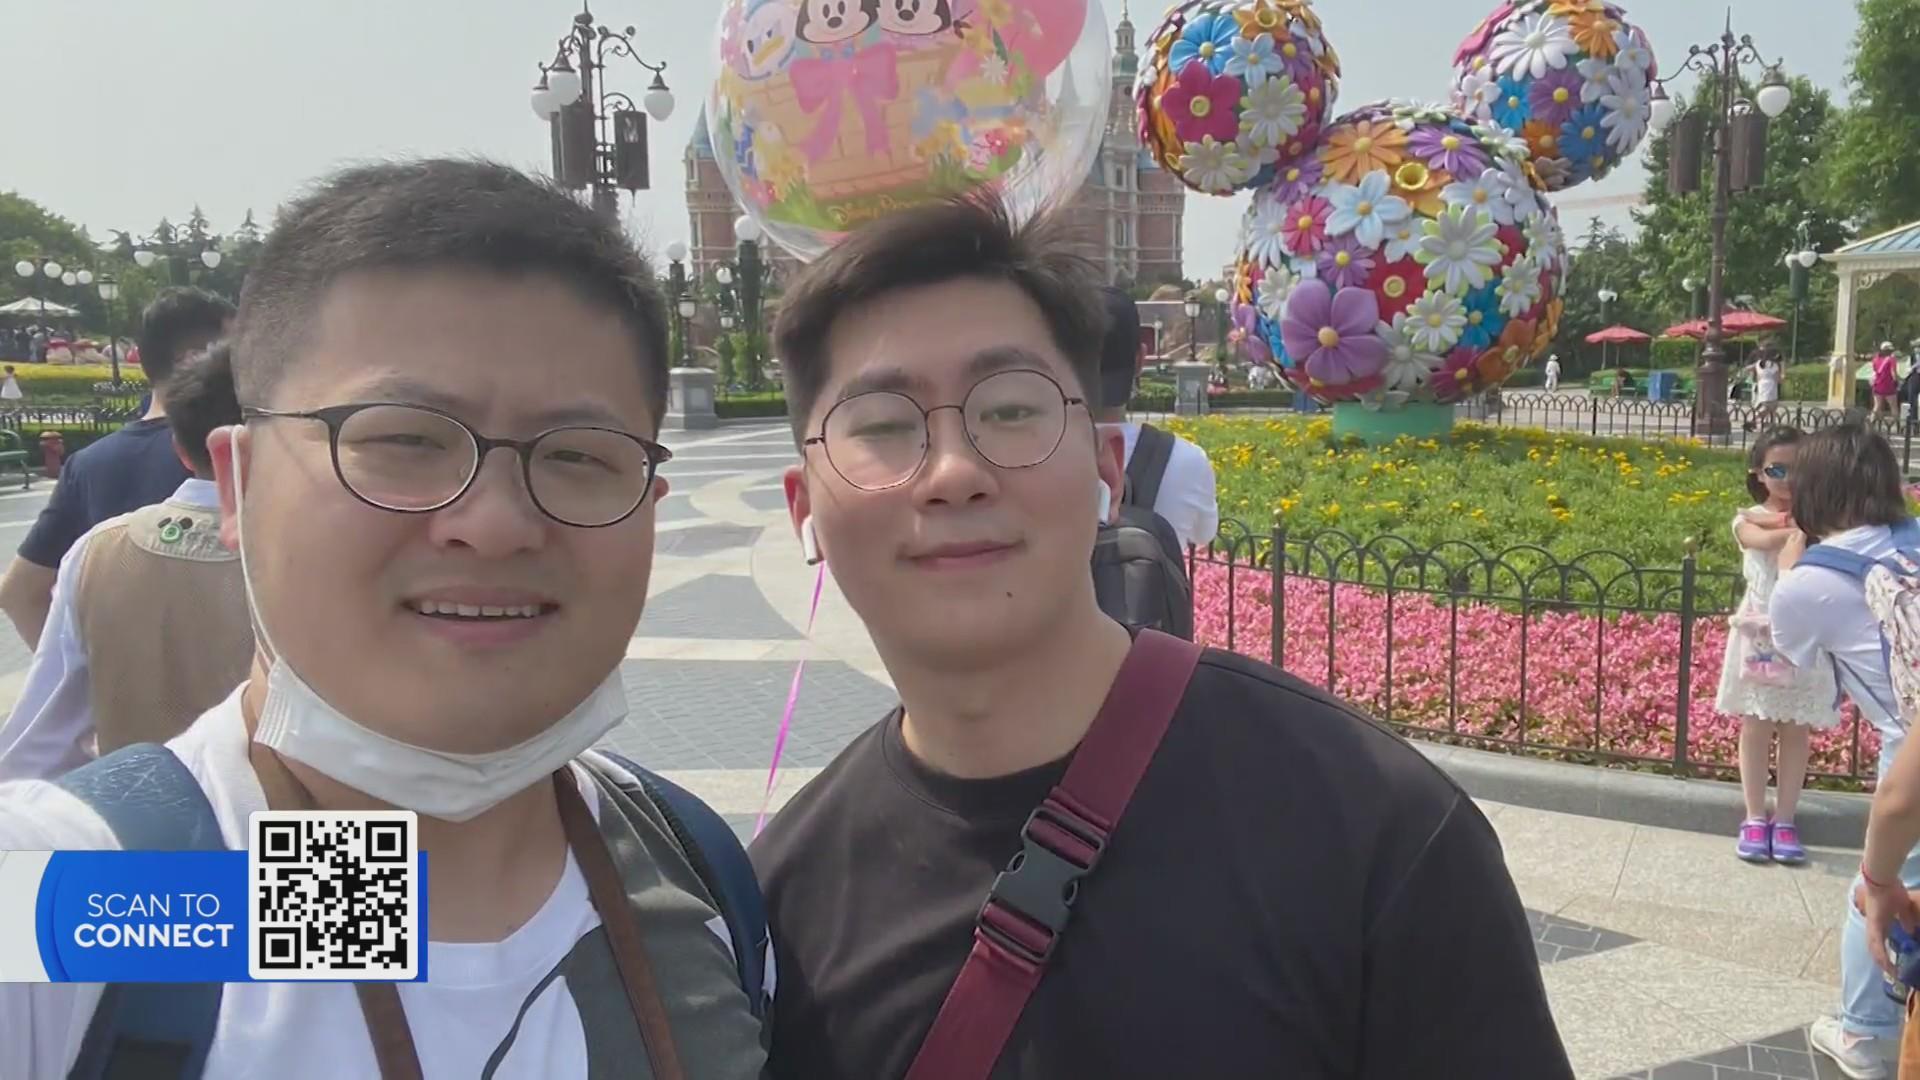 Slpingsex - Utah helping same-sex couples in China get married - CBS Minnesota